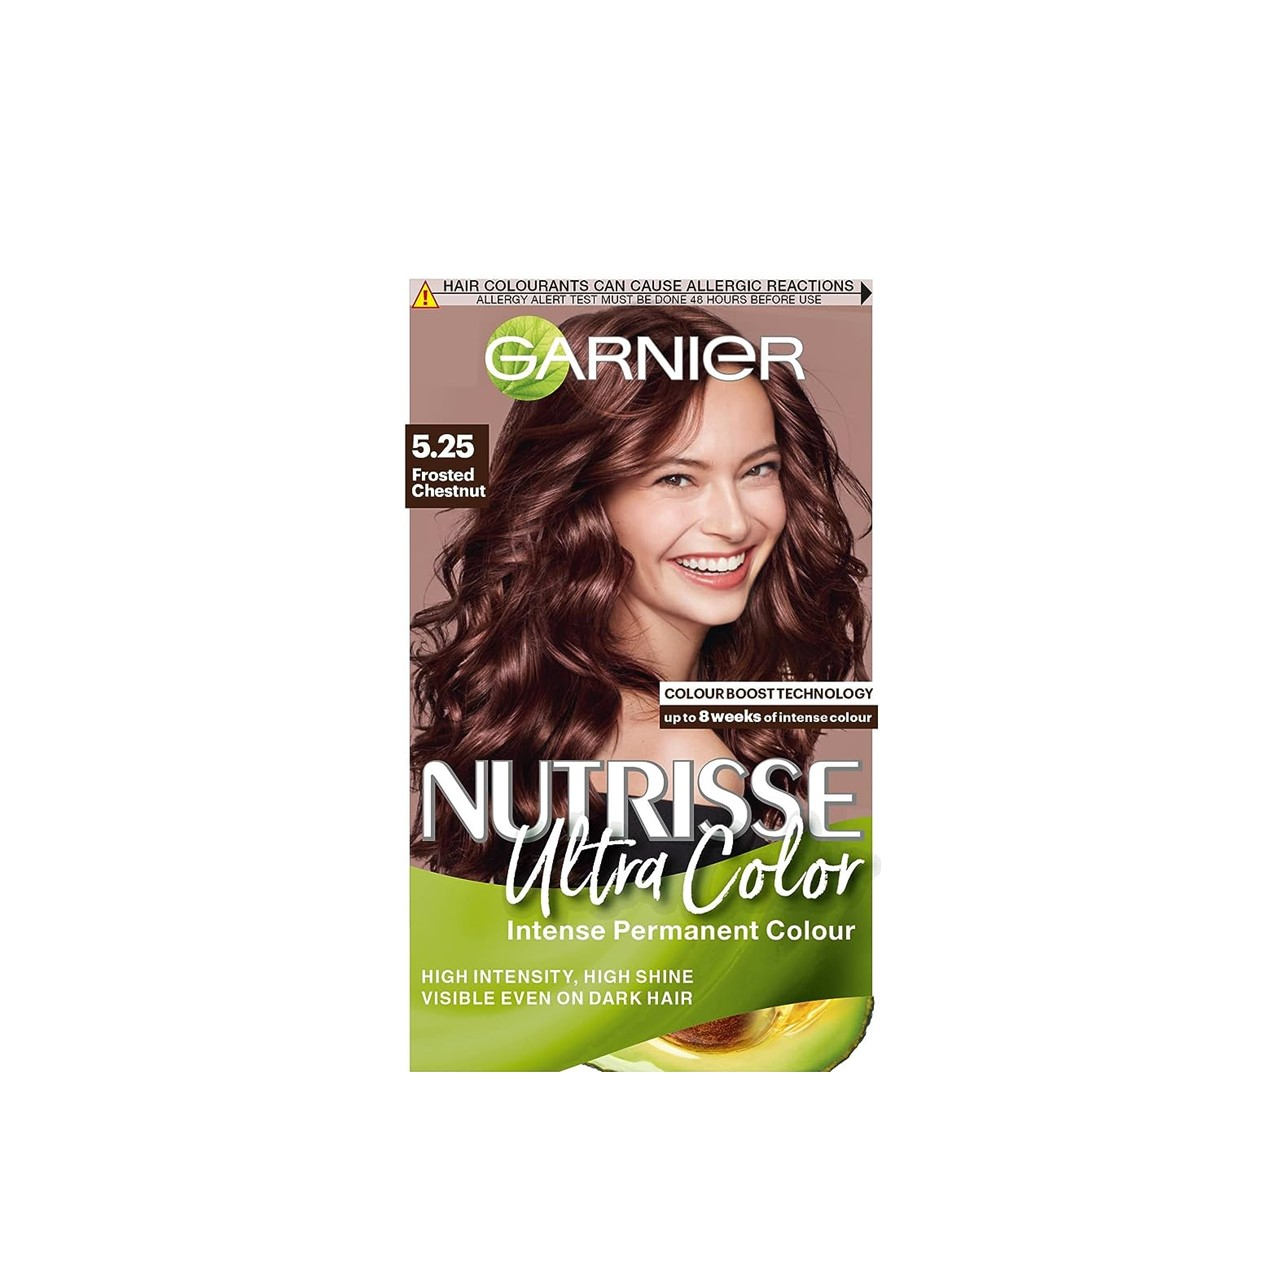 Garnier Nutrisse Ultra Color 5.25 Frosted Chestnut Permanent Hair Dye